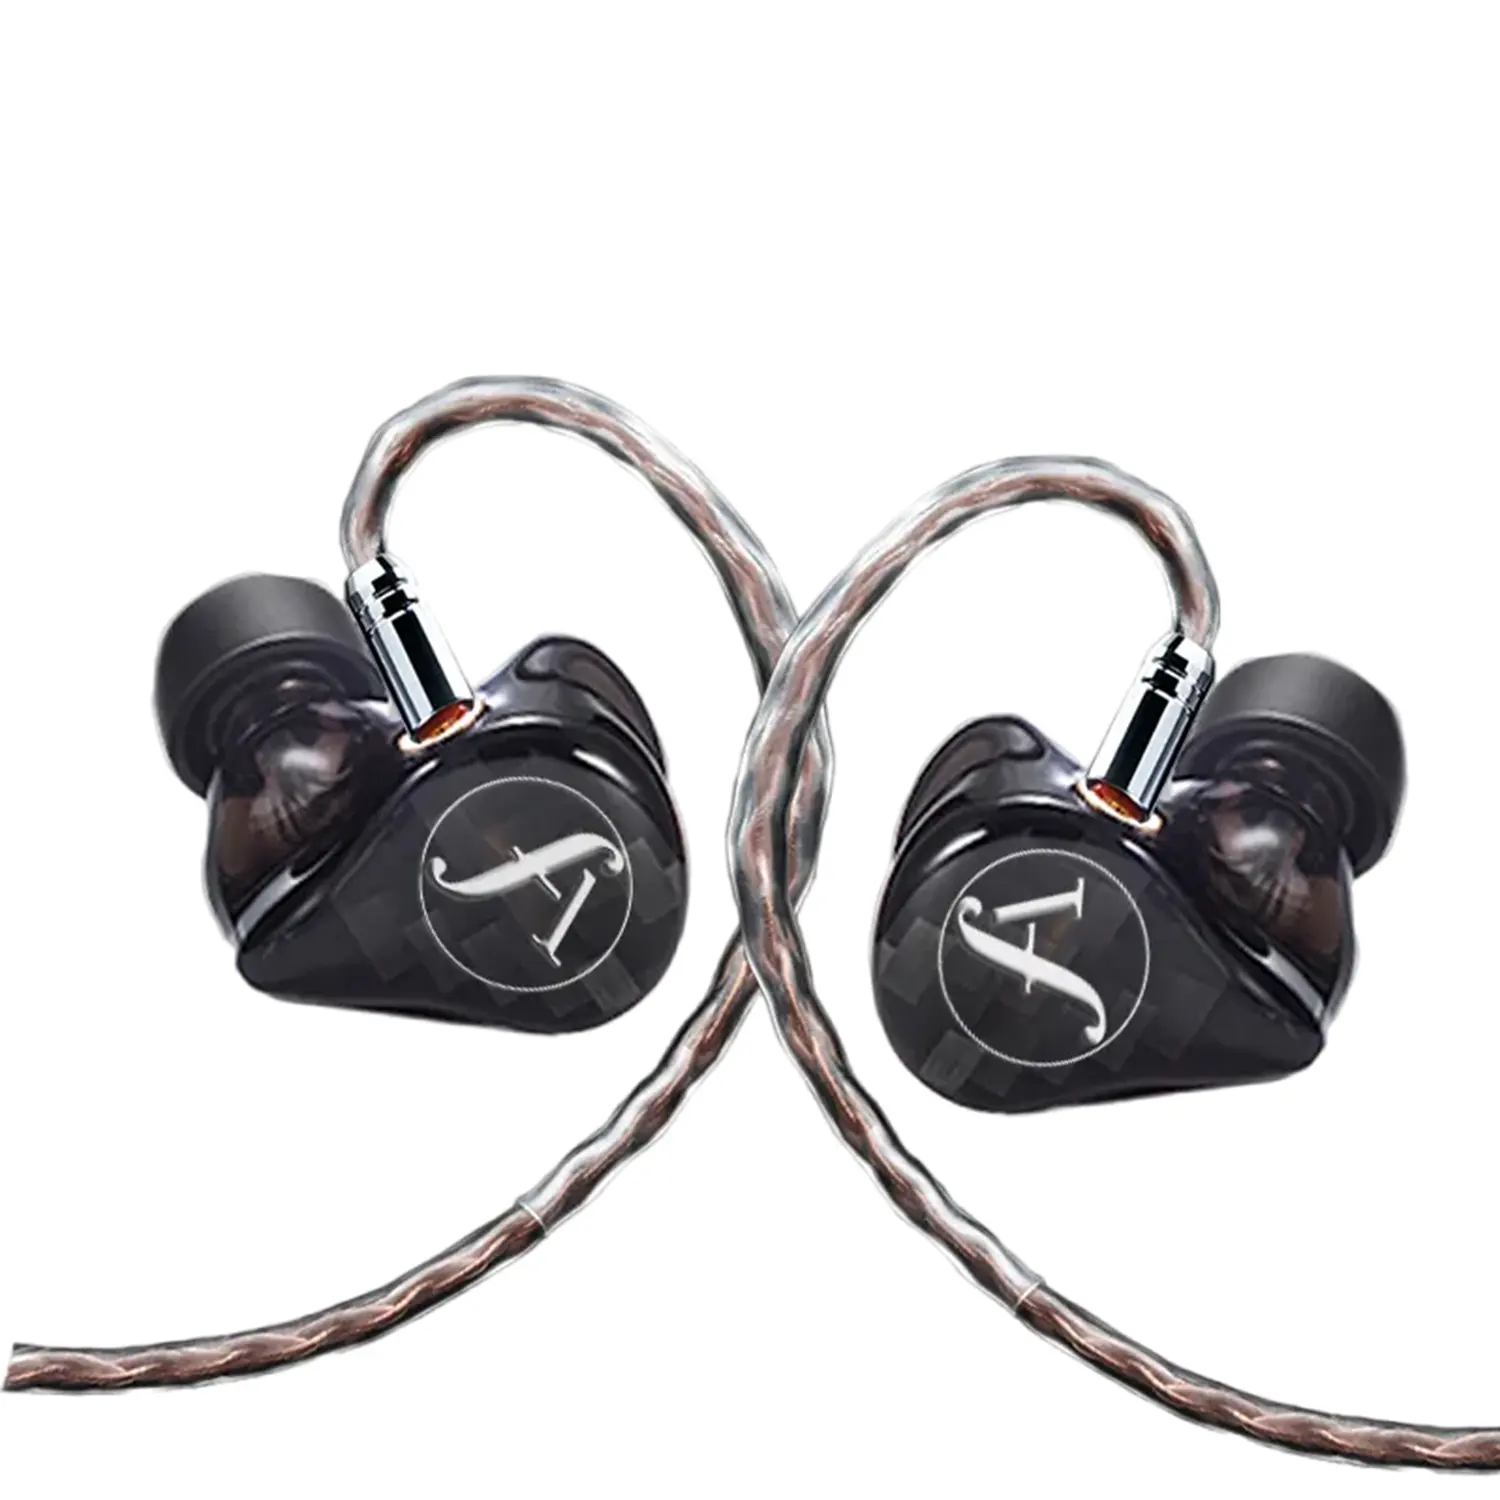 Venda quente Wired Earbuds Equilibrado 1ba 1dd em Ear Monitores Fones De Ouvido para Músico Cantor Estágio Banda Hifi Kbear fone de ouvido personalizado